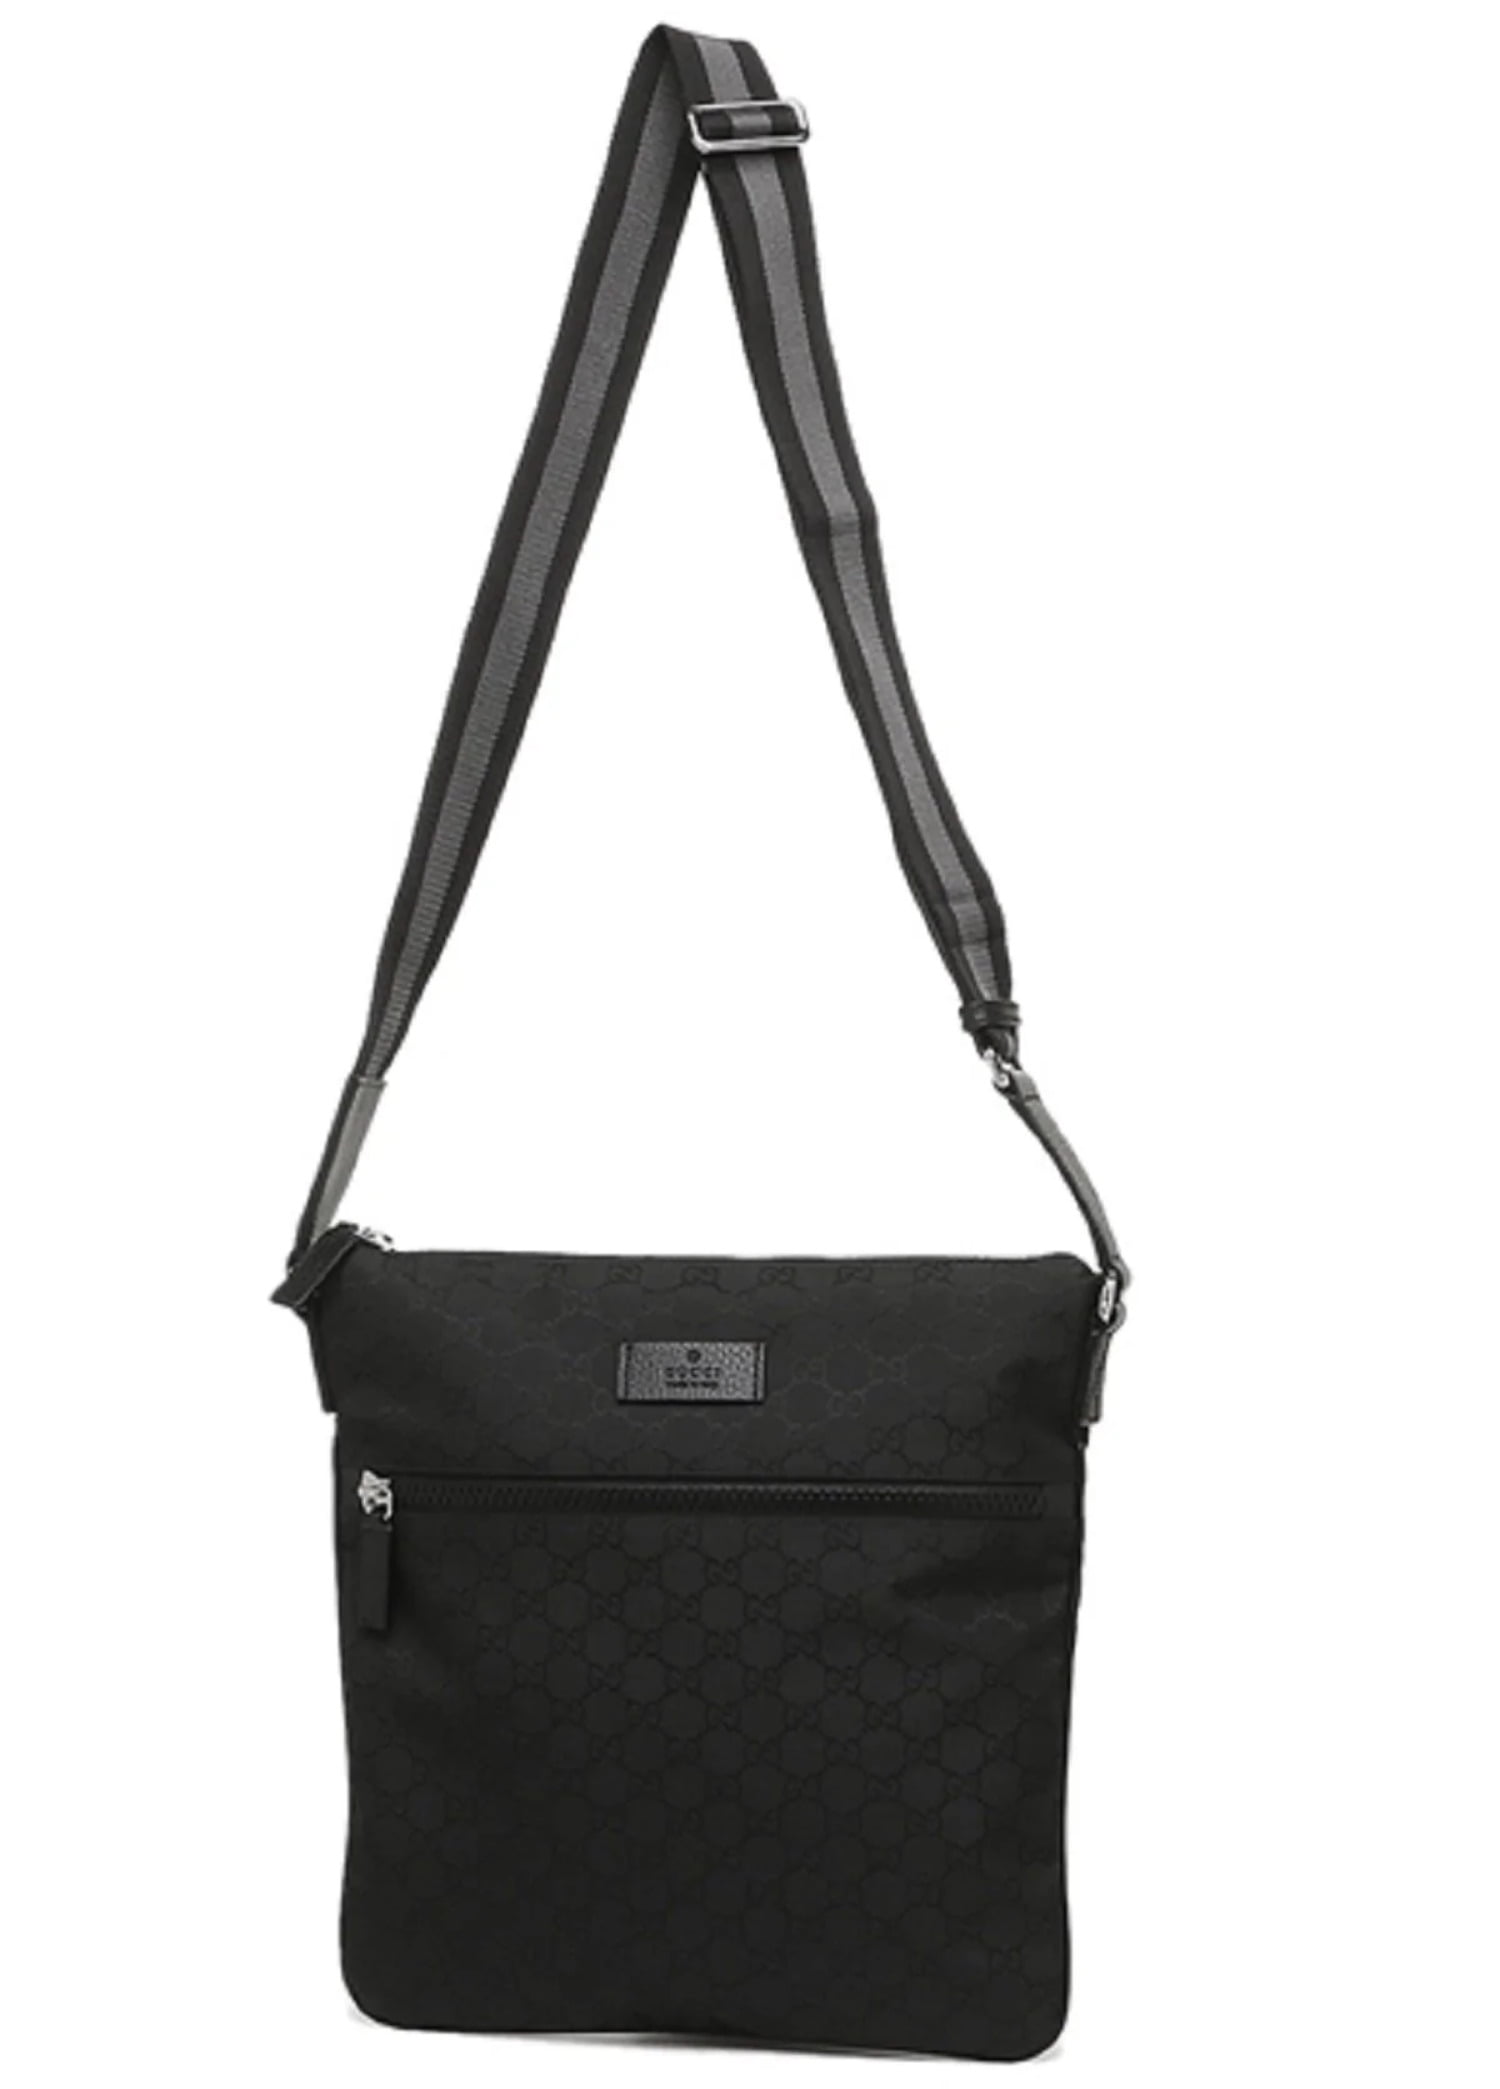 Hot Gucci'''sss Black Messenger Bag Women's Messenger Bag Men's Shoulder Bag  - China Woman Handbag and Luxury Bag price